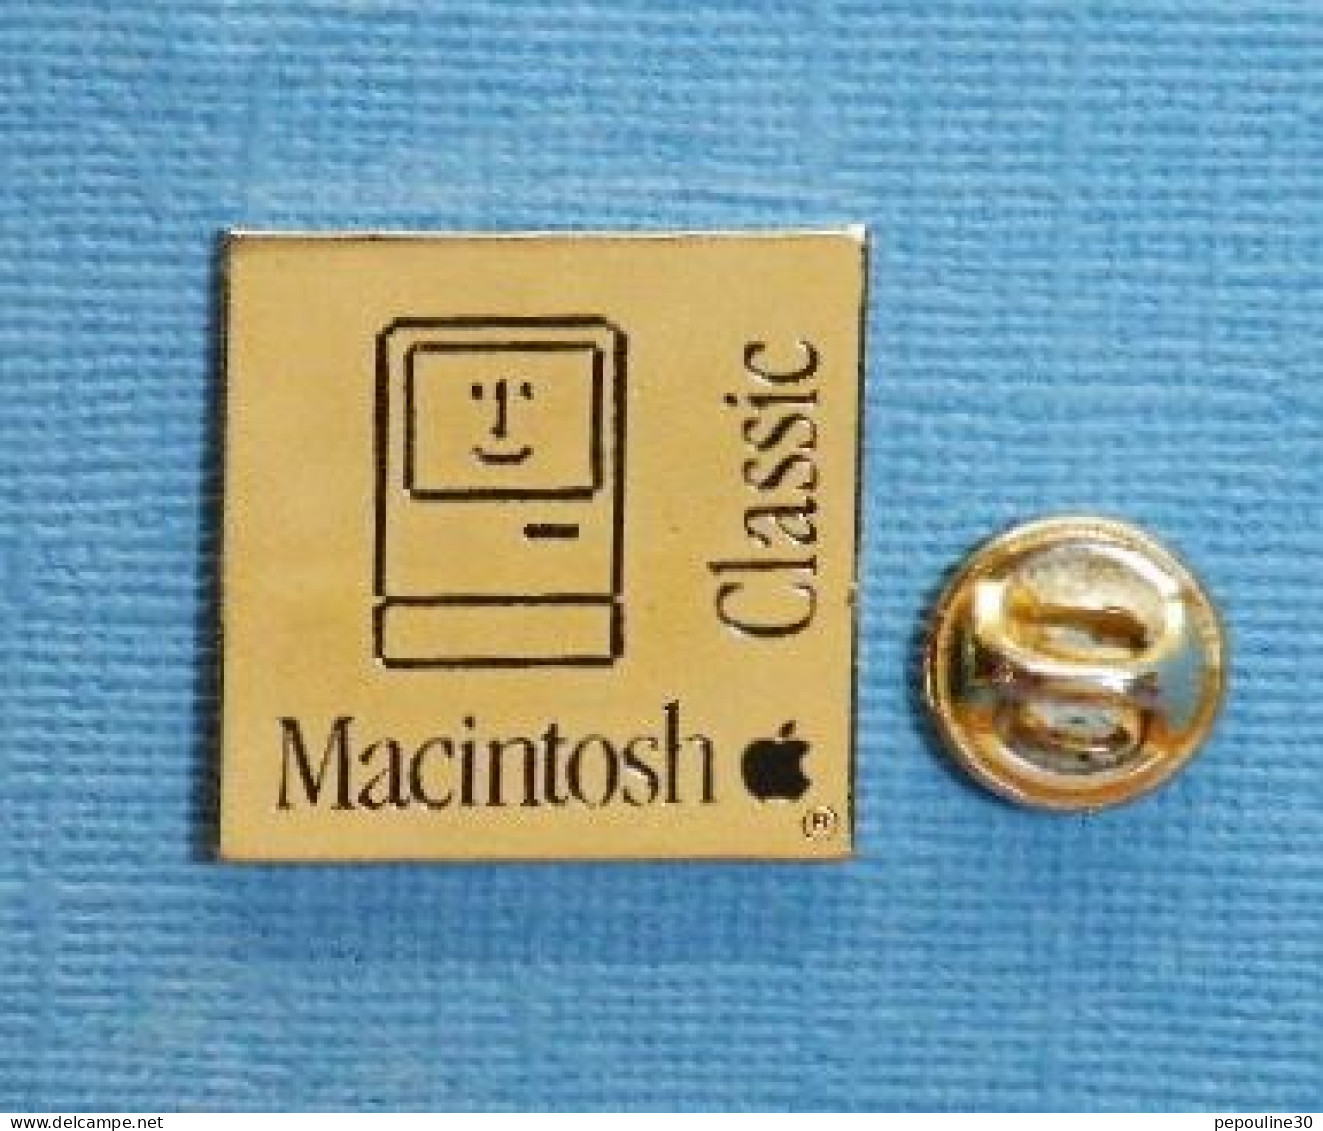 1 PIN'S //  ** MACINTOSH APPLE CLASSIC® ** - Informatique